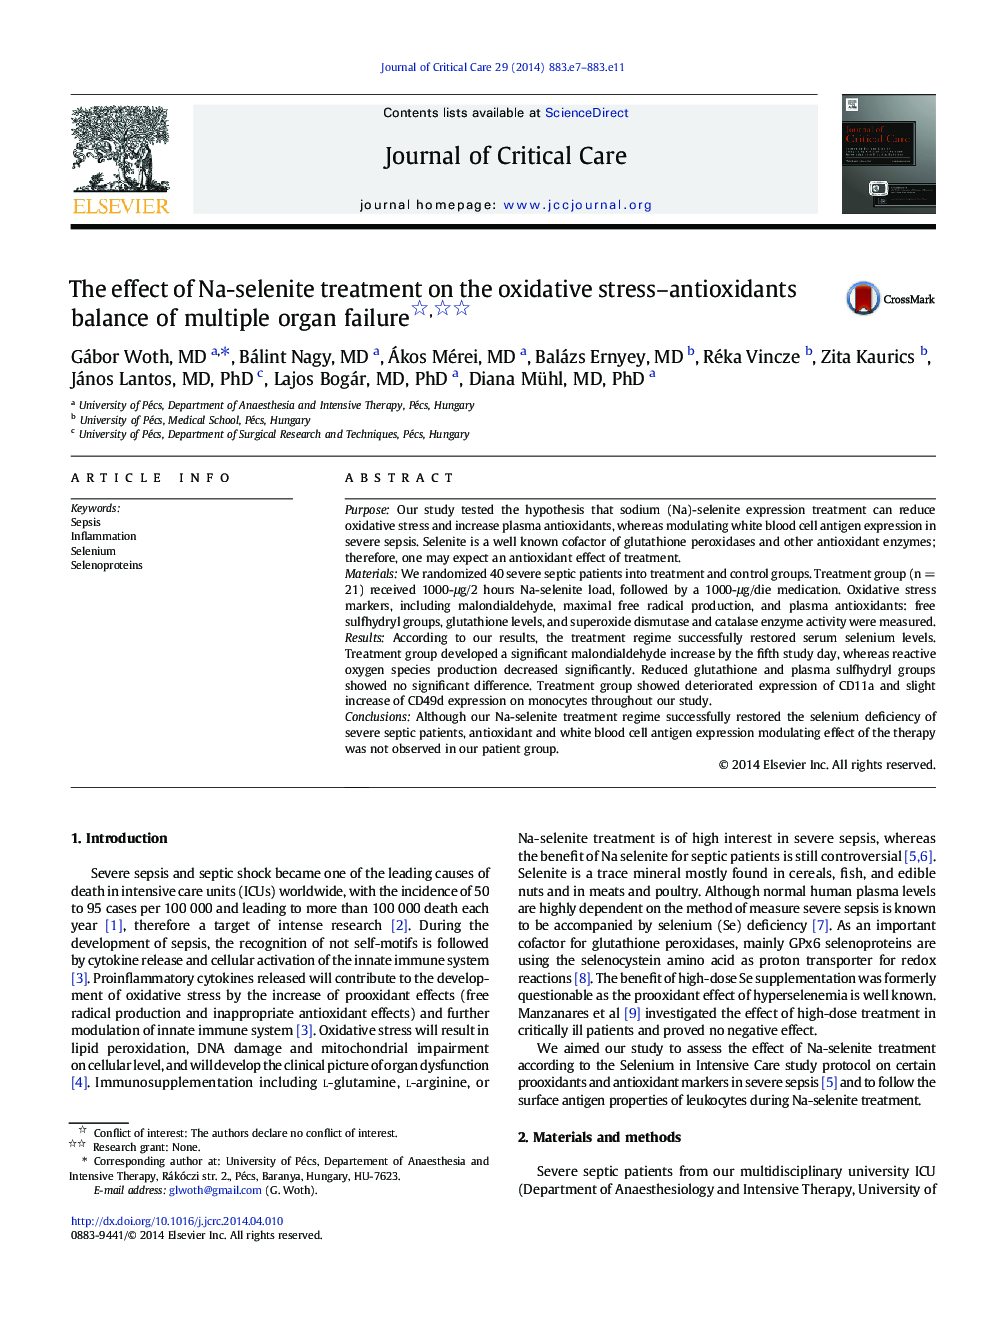 Electronic ArticleThe effect of Na-selenite treatment on the oxidative stress-antioxidants balance of multiple organ failure